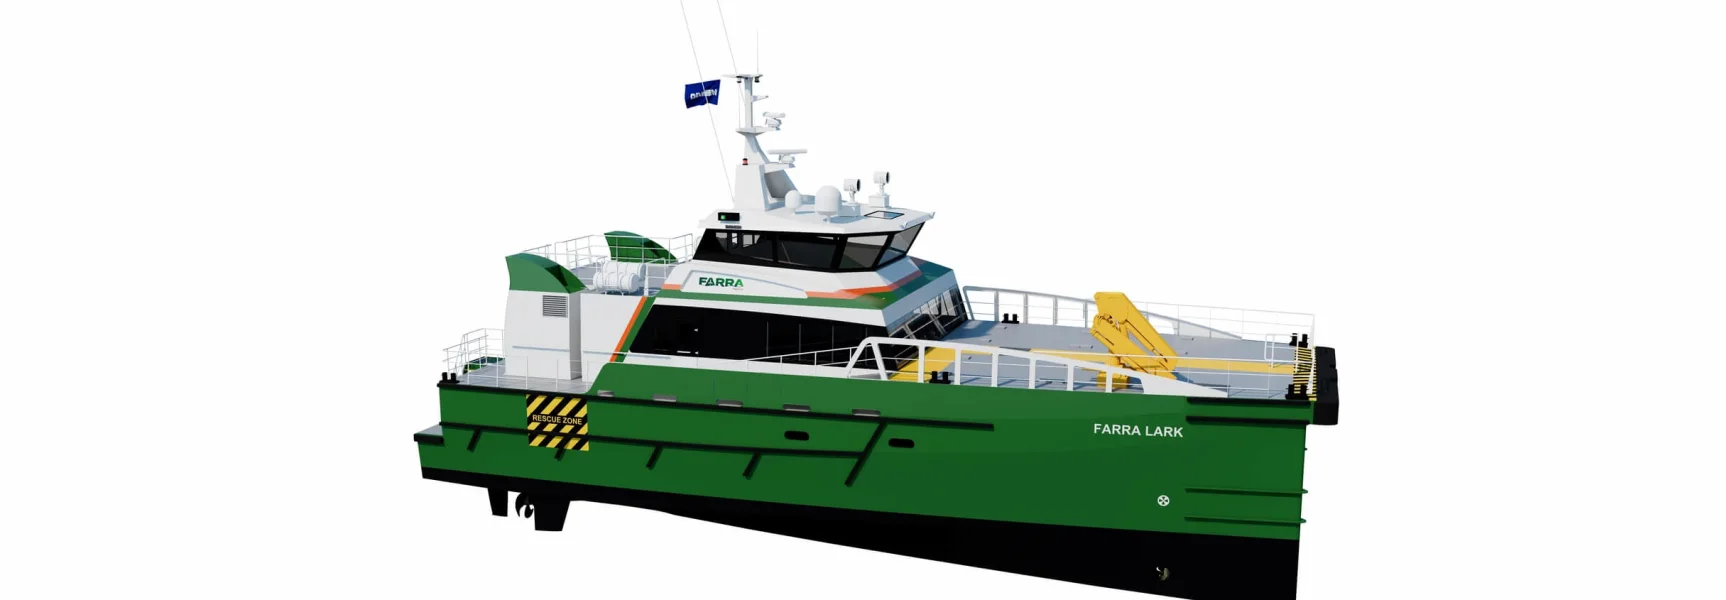 eBlue_economy_Damen Fast Crew Supplier 2710 for growing Irish fleet